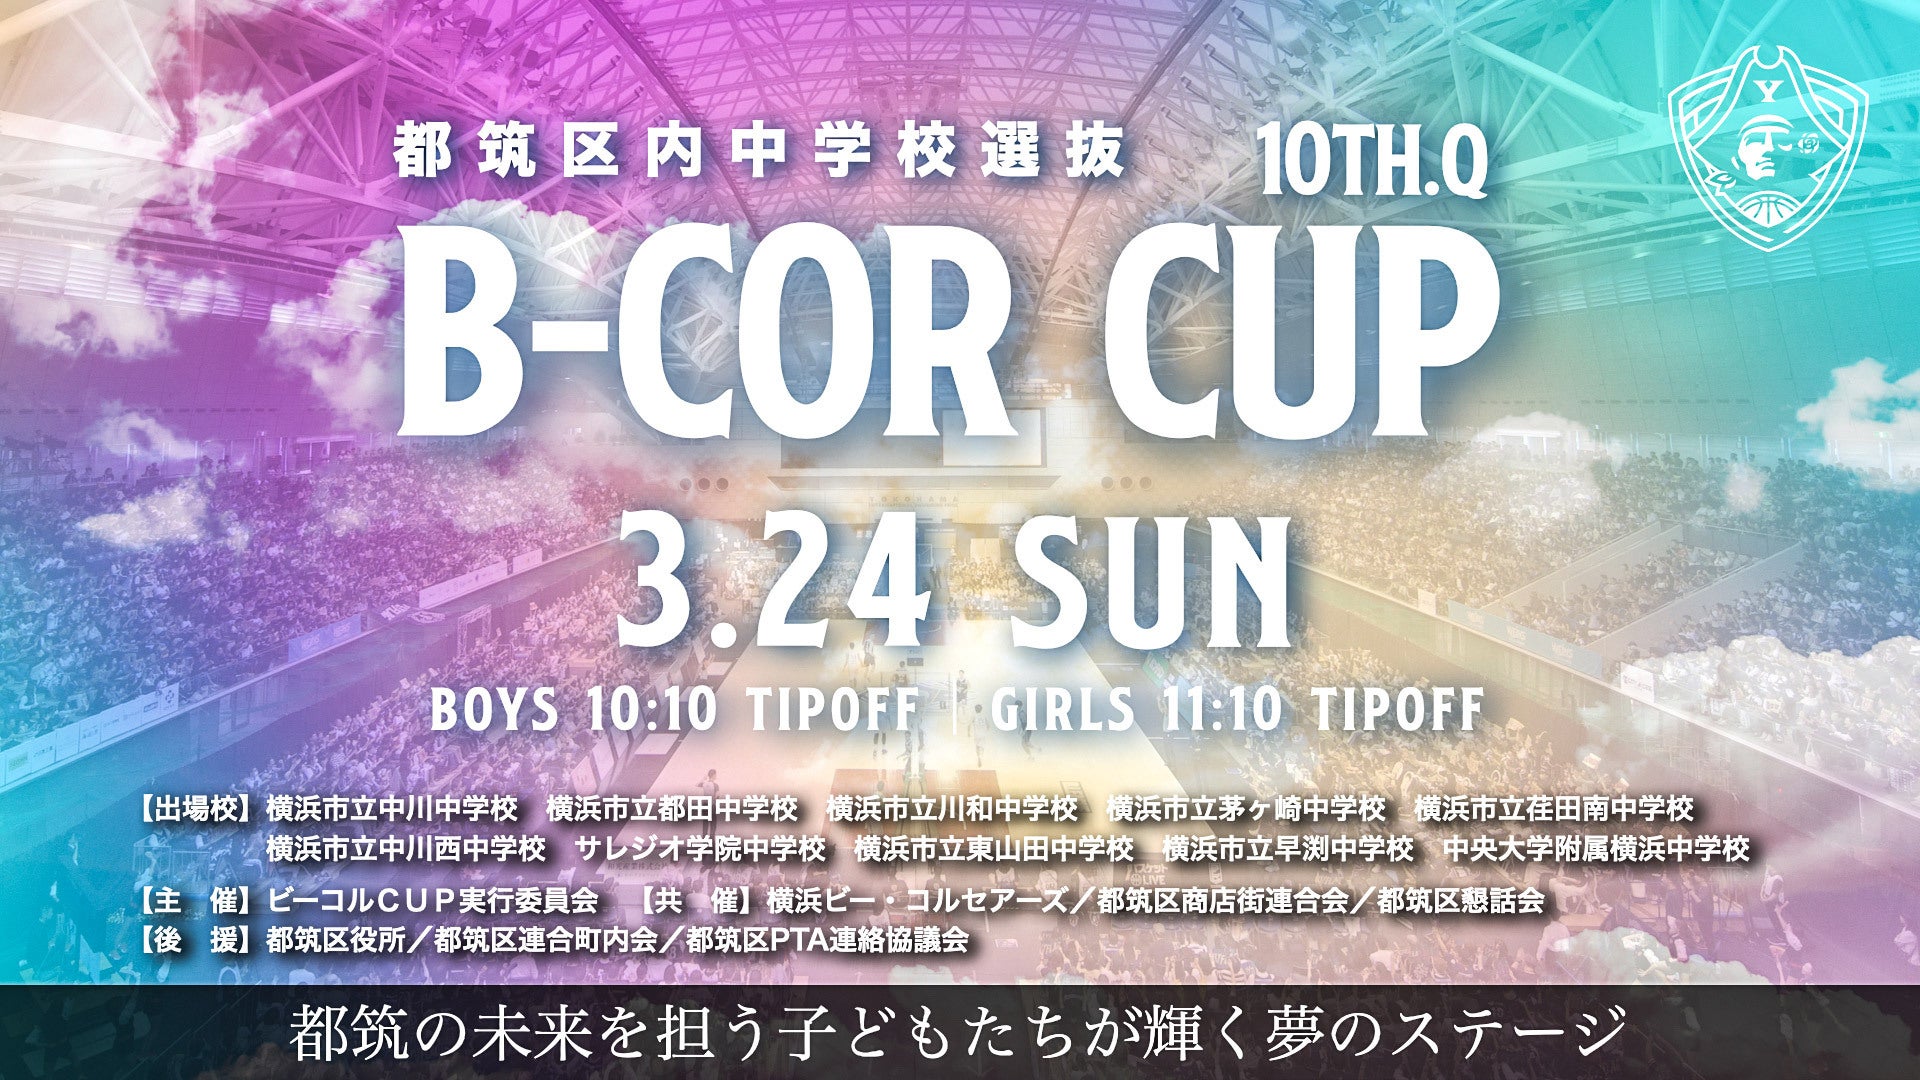 「B-COR CUP」開催